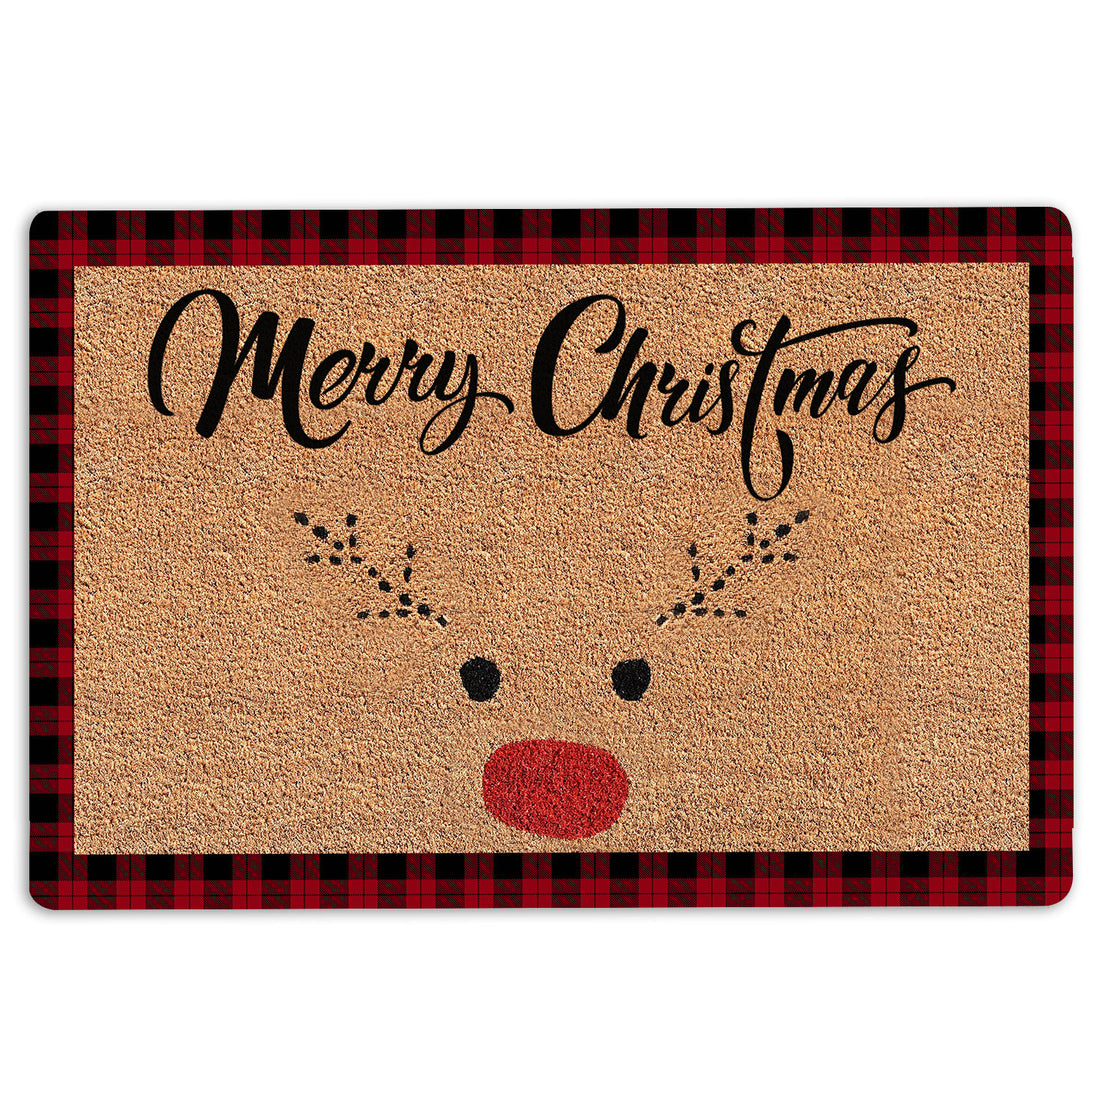 Ohaprints-Doormat-Outdoor-Indoor-Merrry-Christmas-Rudolph-Red-Buffalo-Plaid-Xmas-Winter-Holiday-Rubber-Door-Mat-2014-18'' x 30''